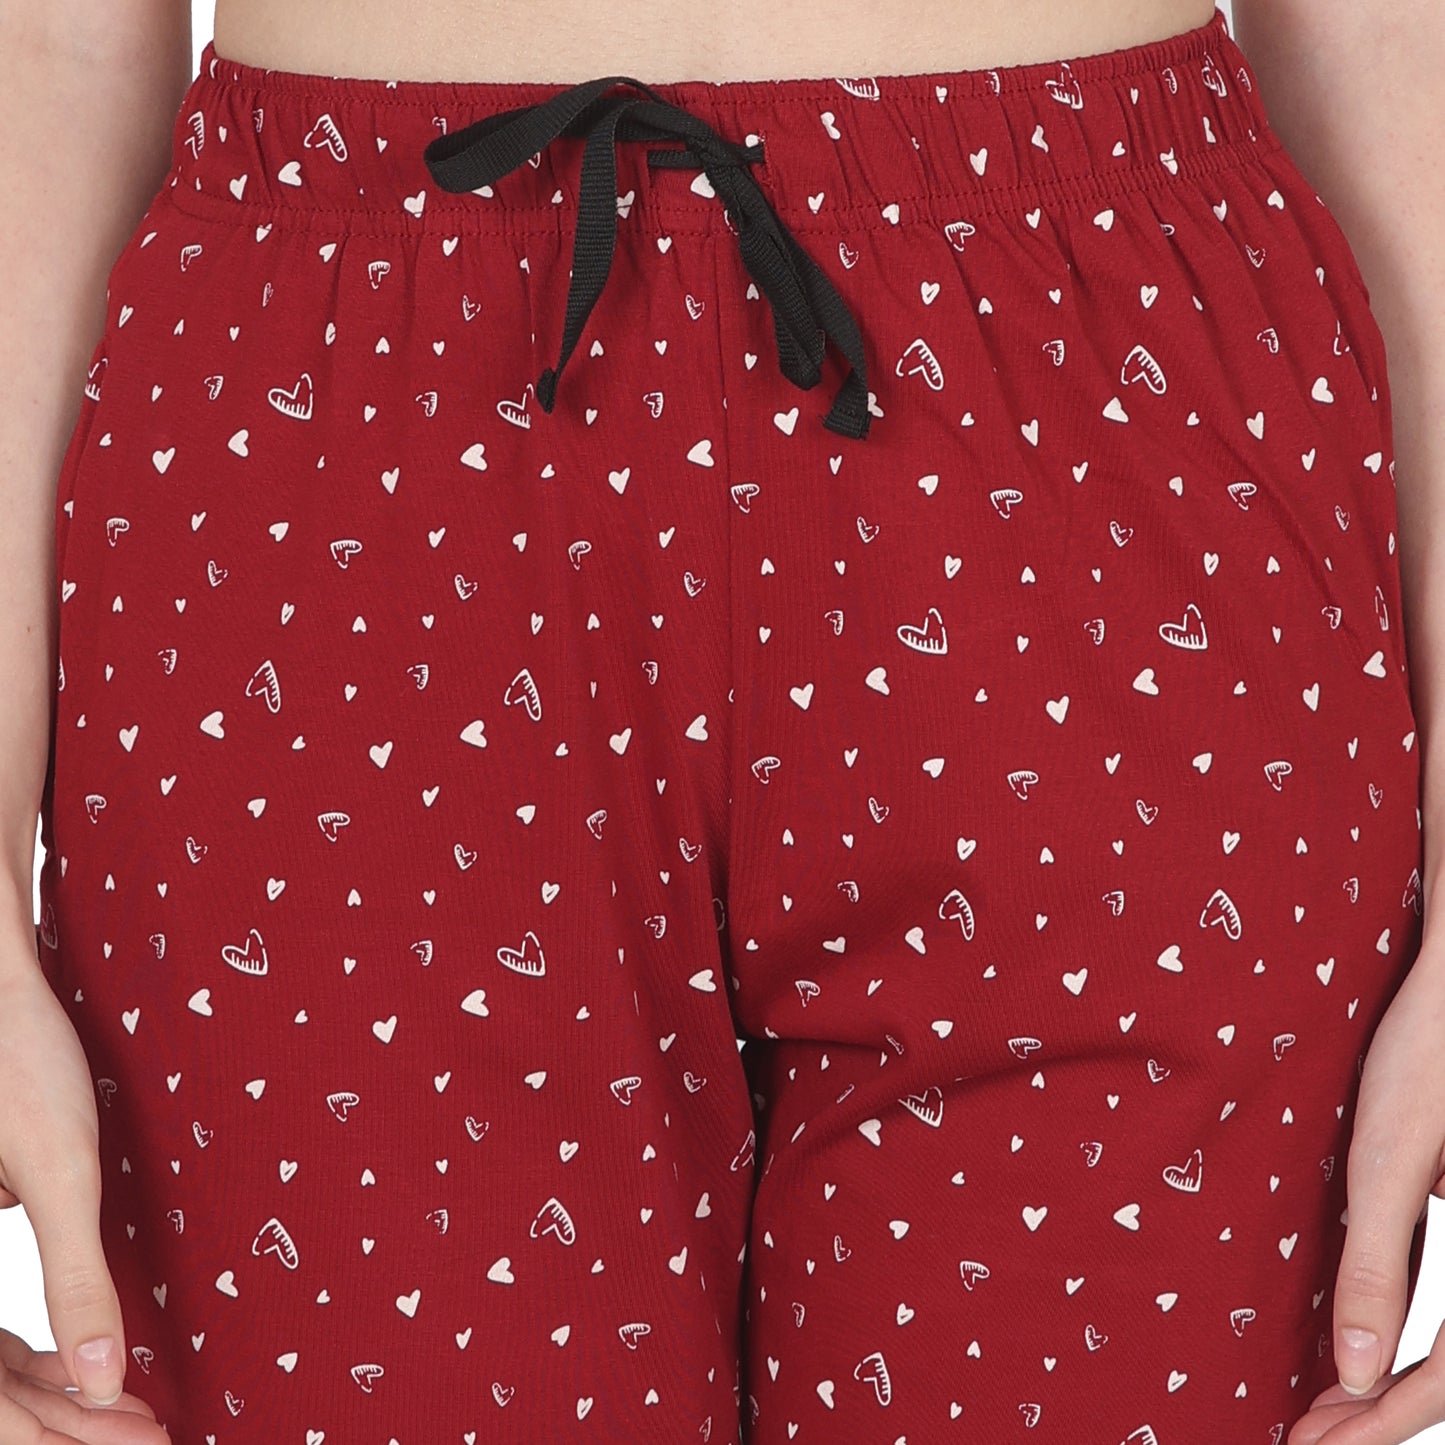 Eazy Women's Printed Capri Pants- Pack of 3- Black, Blush & Cherry Red